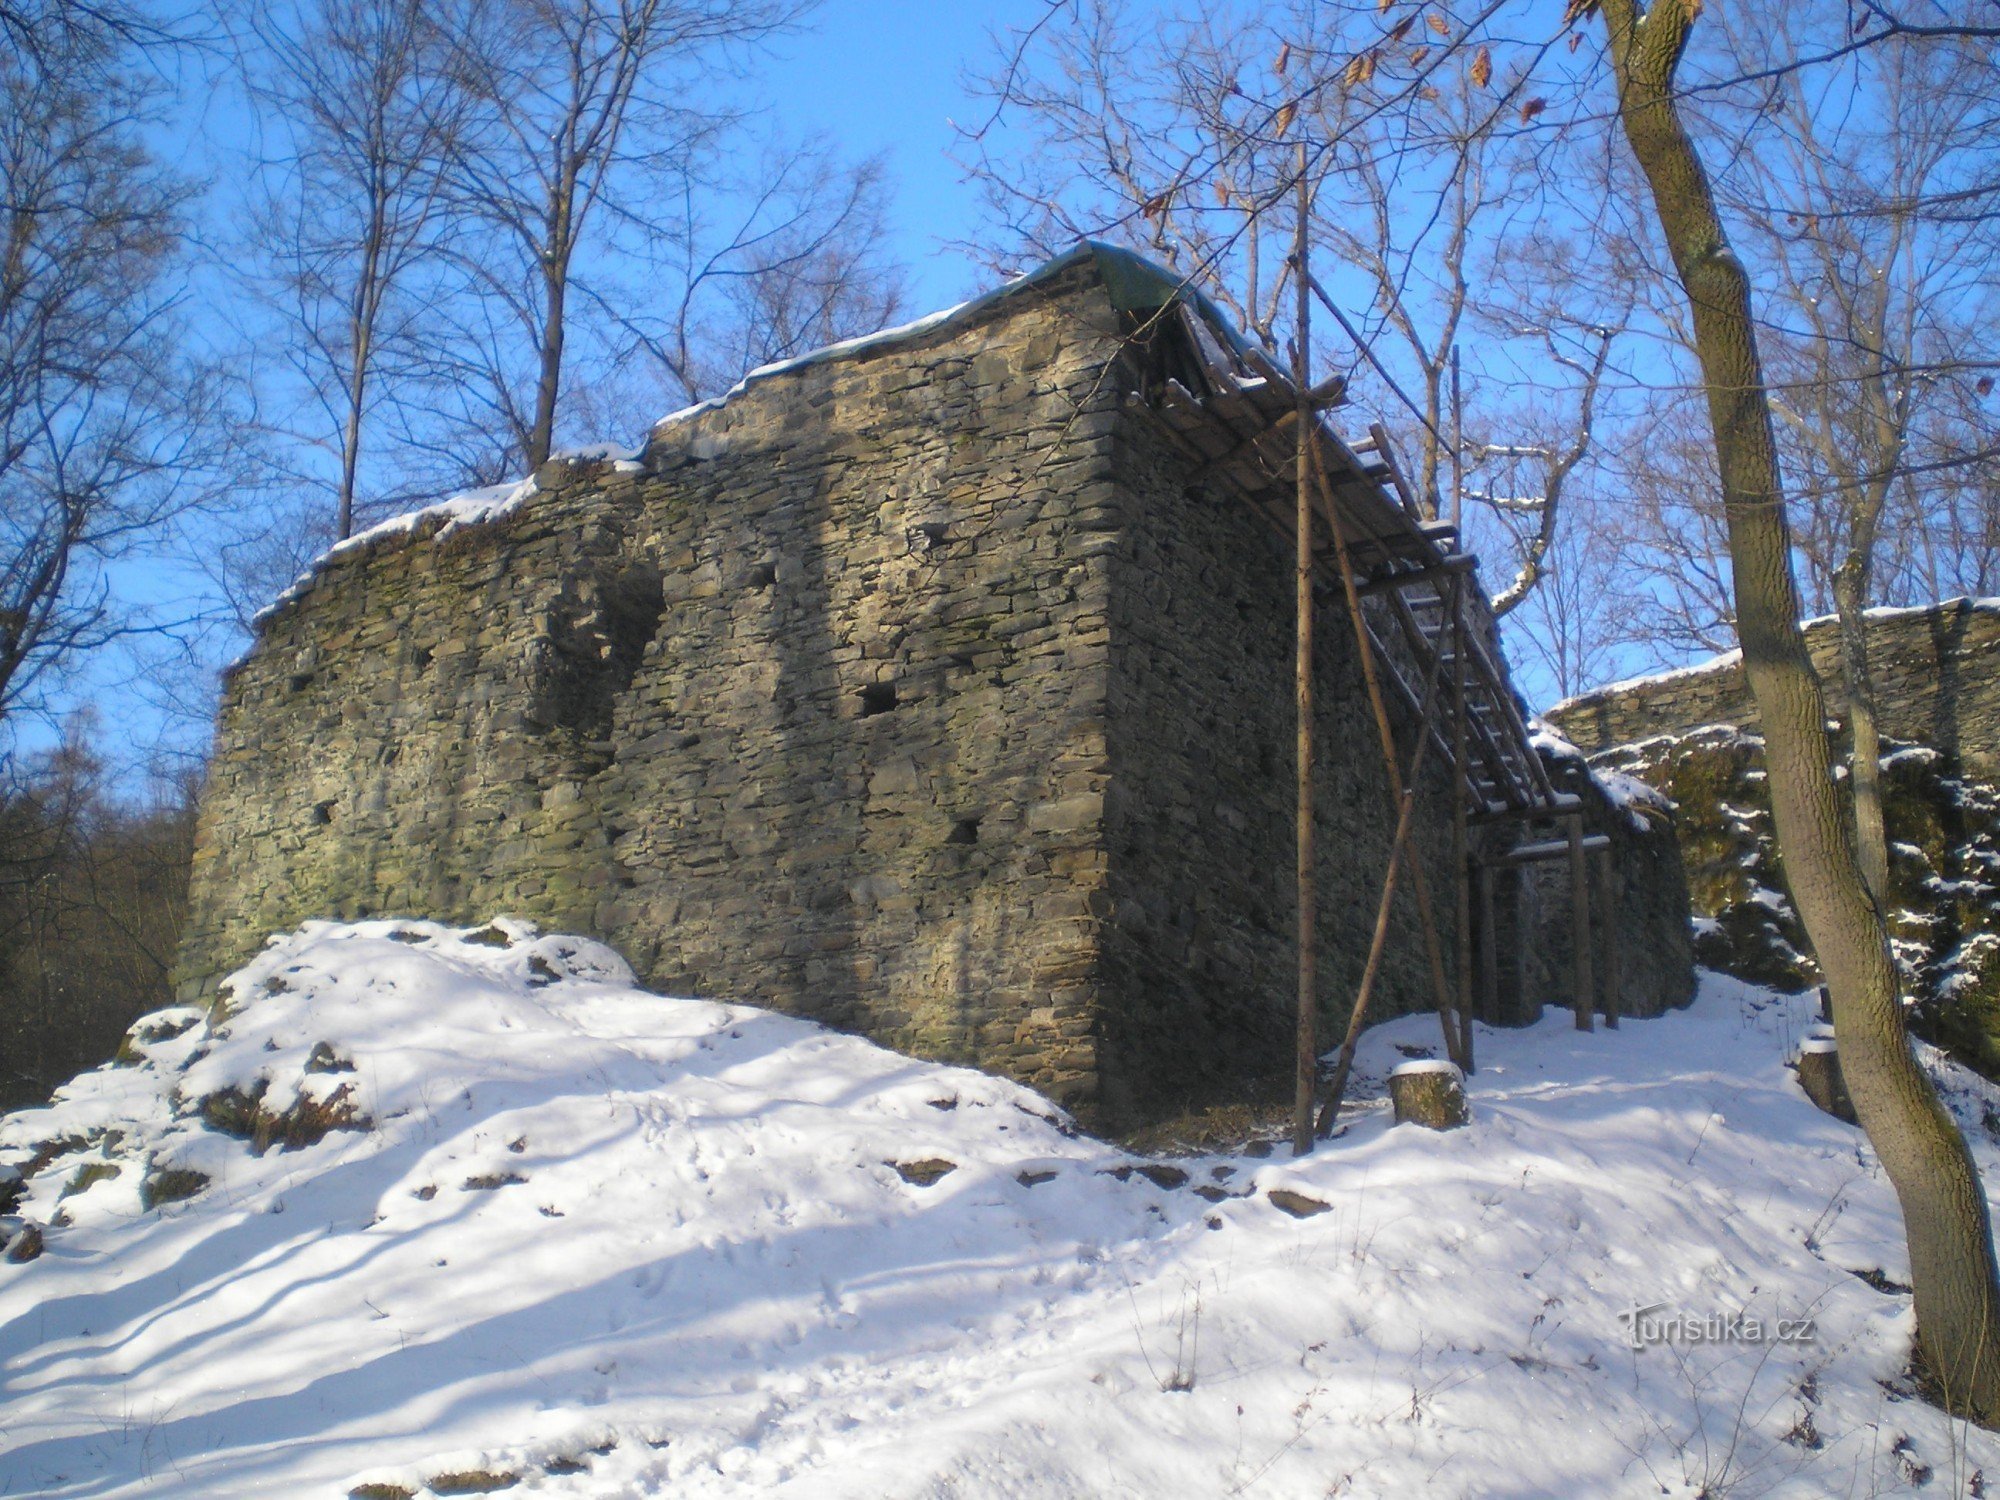 The ruins of Jenčov